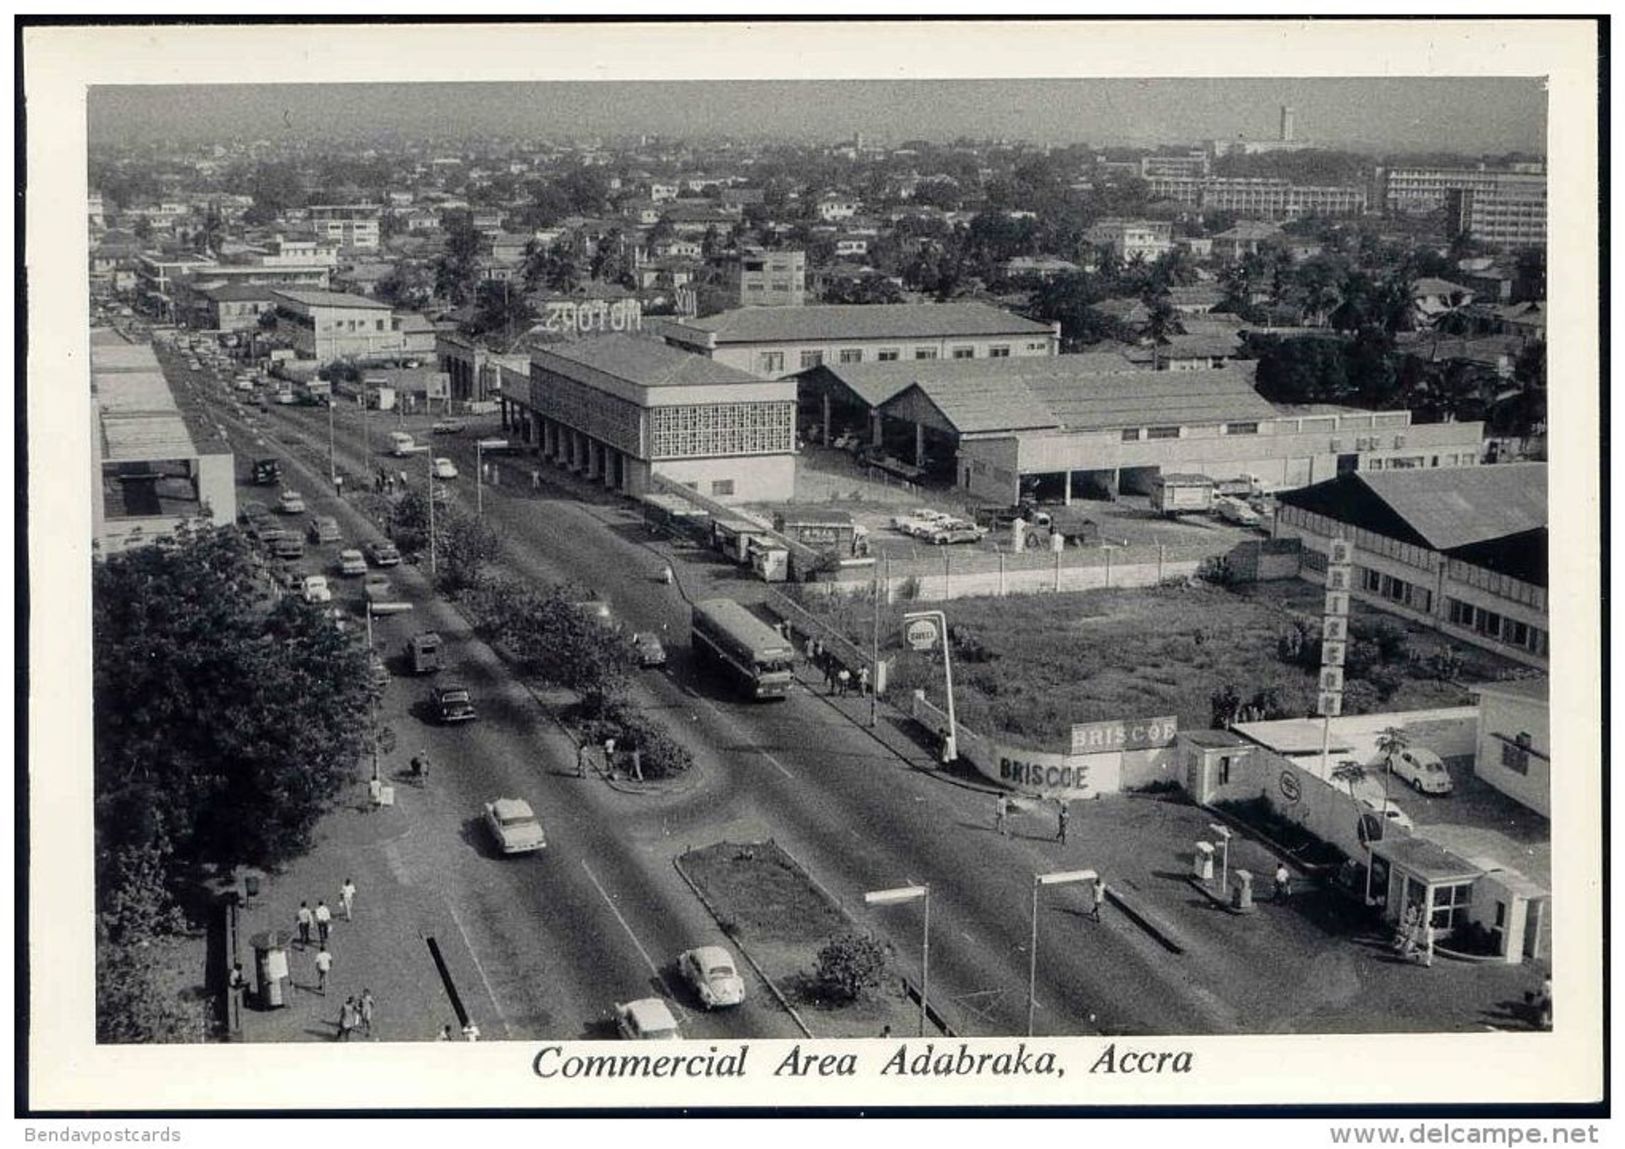 Ghana, ACCRA, Commercial Area Adabraka, Gas Station (1950s) RPPC - Ghana - Gold Coast